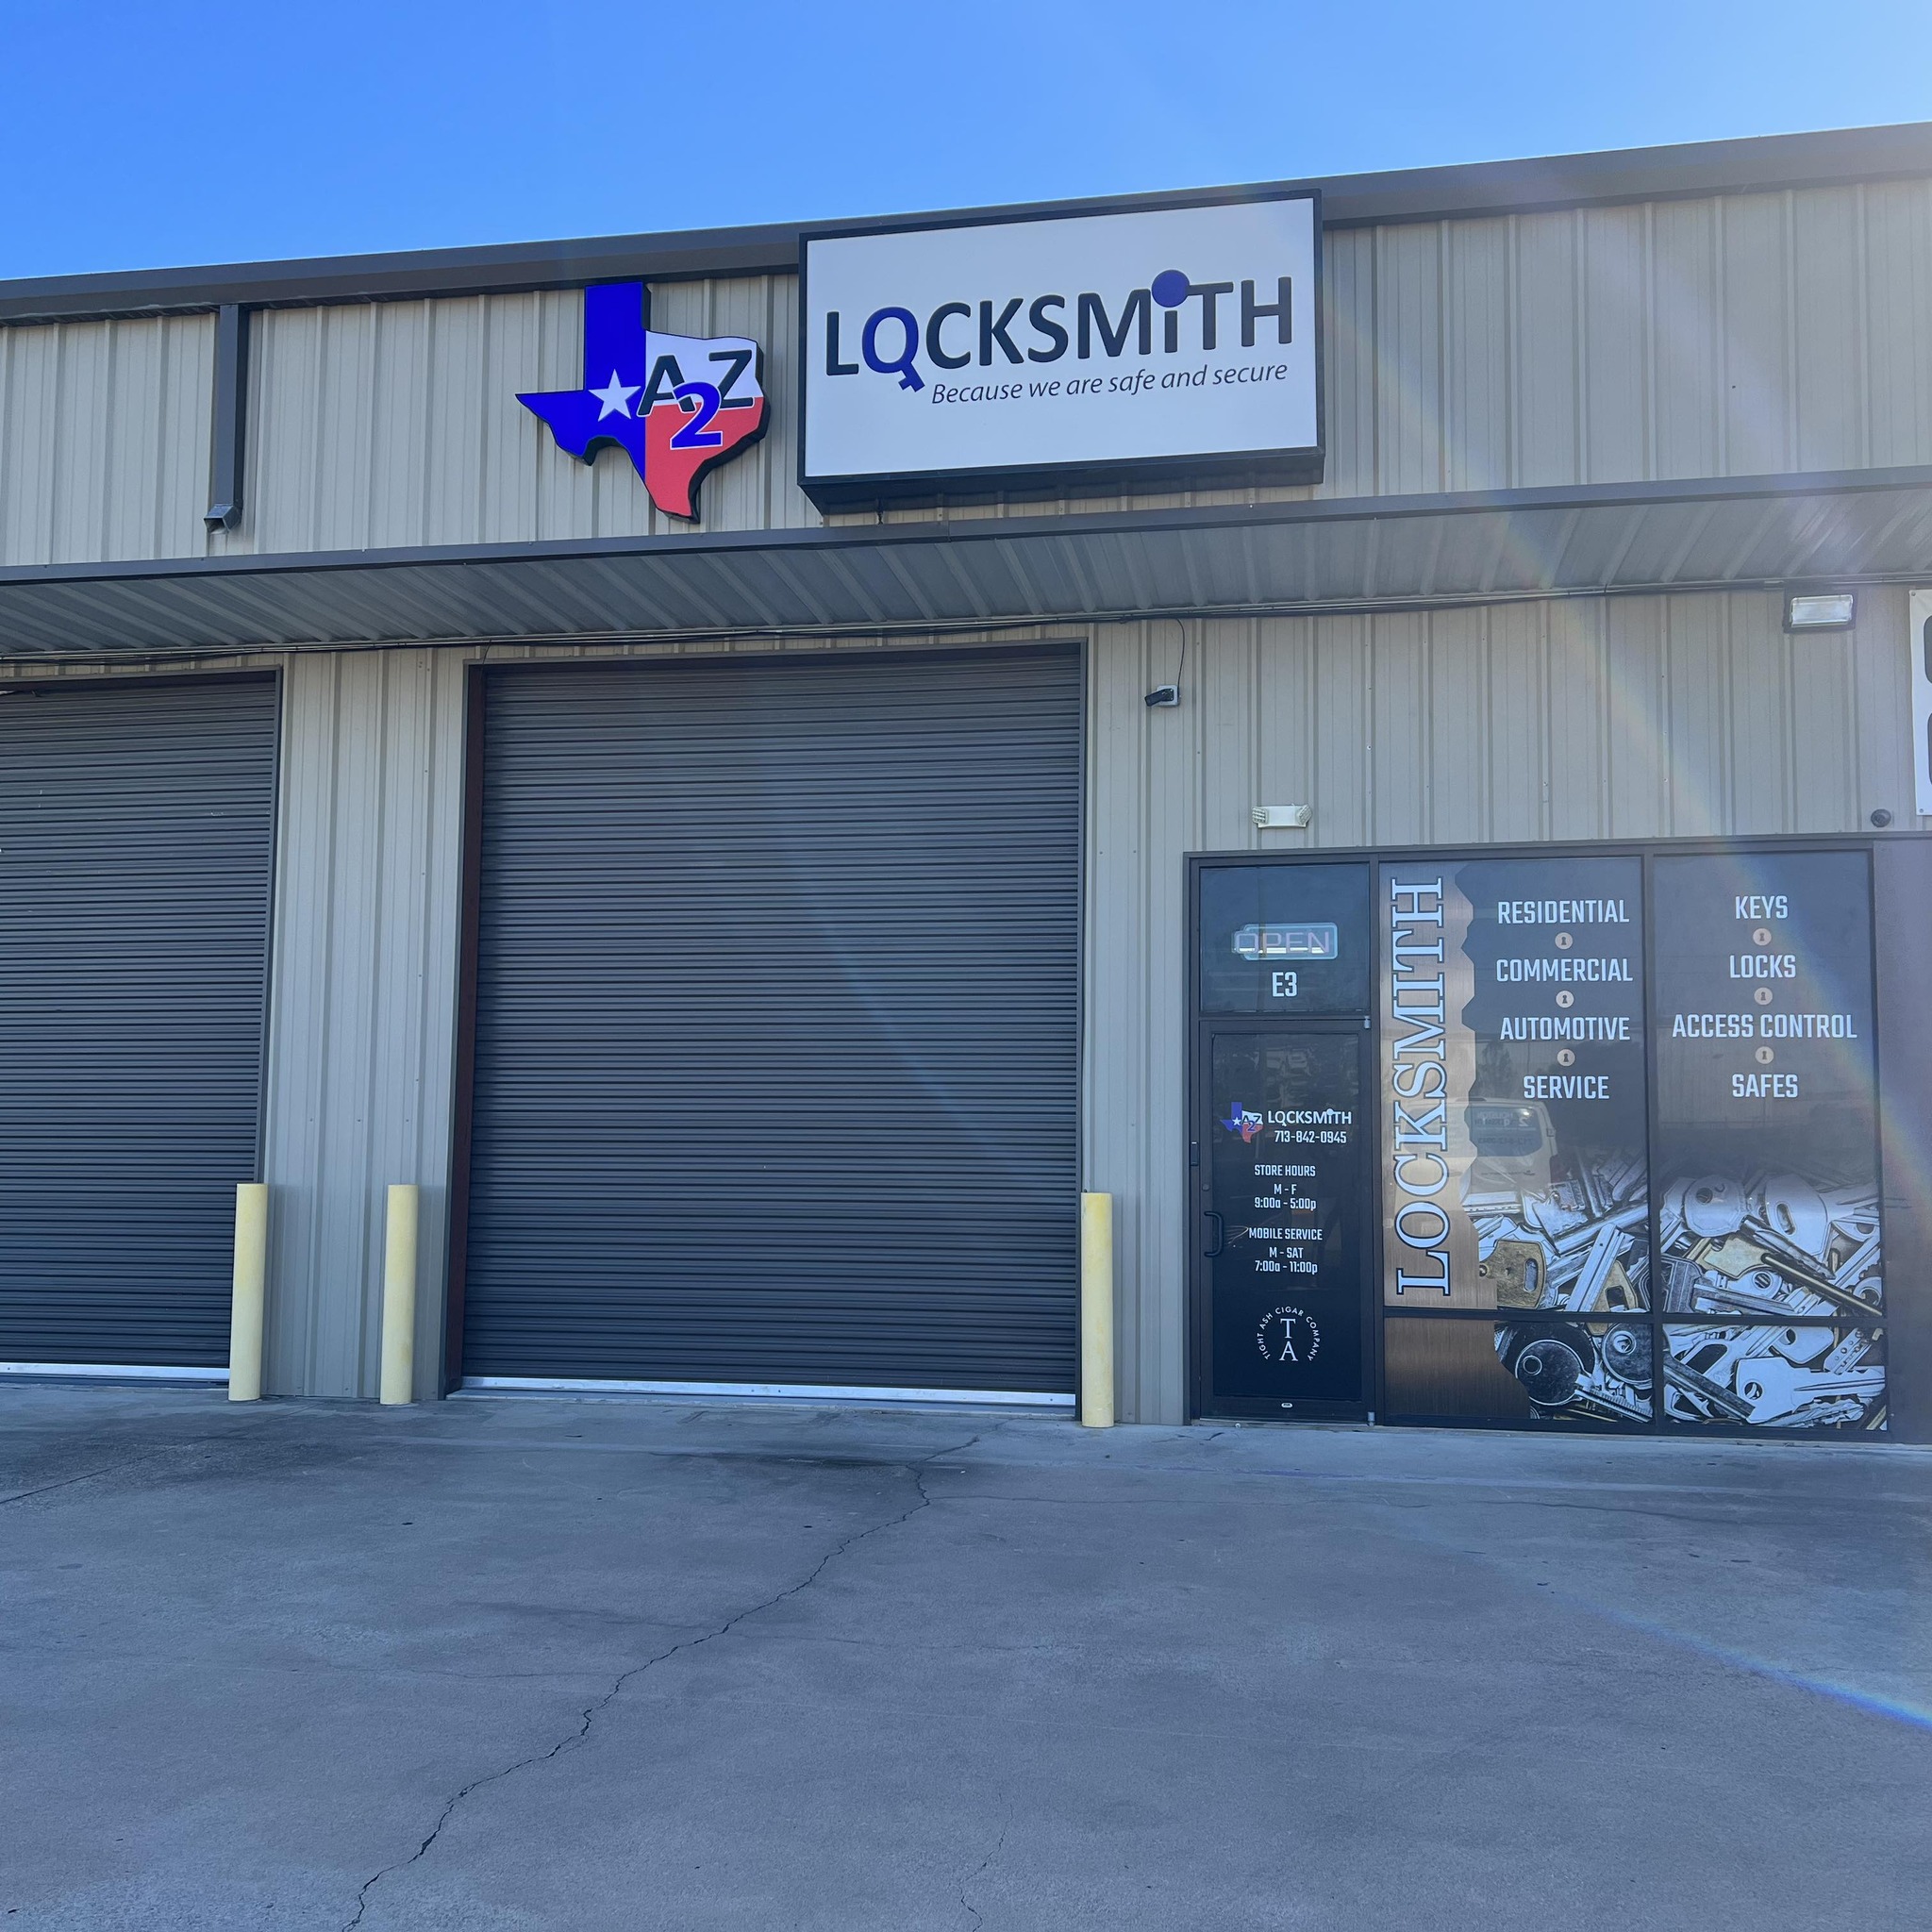 A2Z Locksmith Storefront